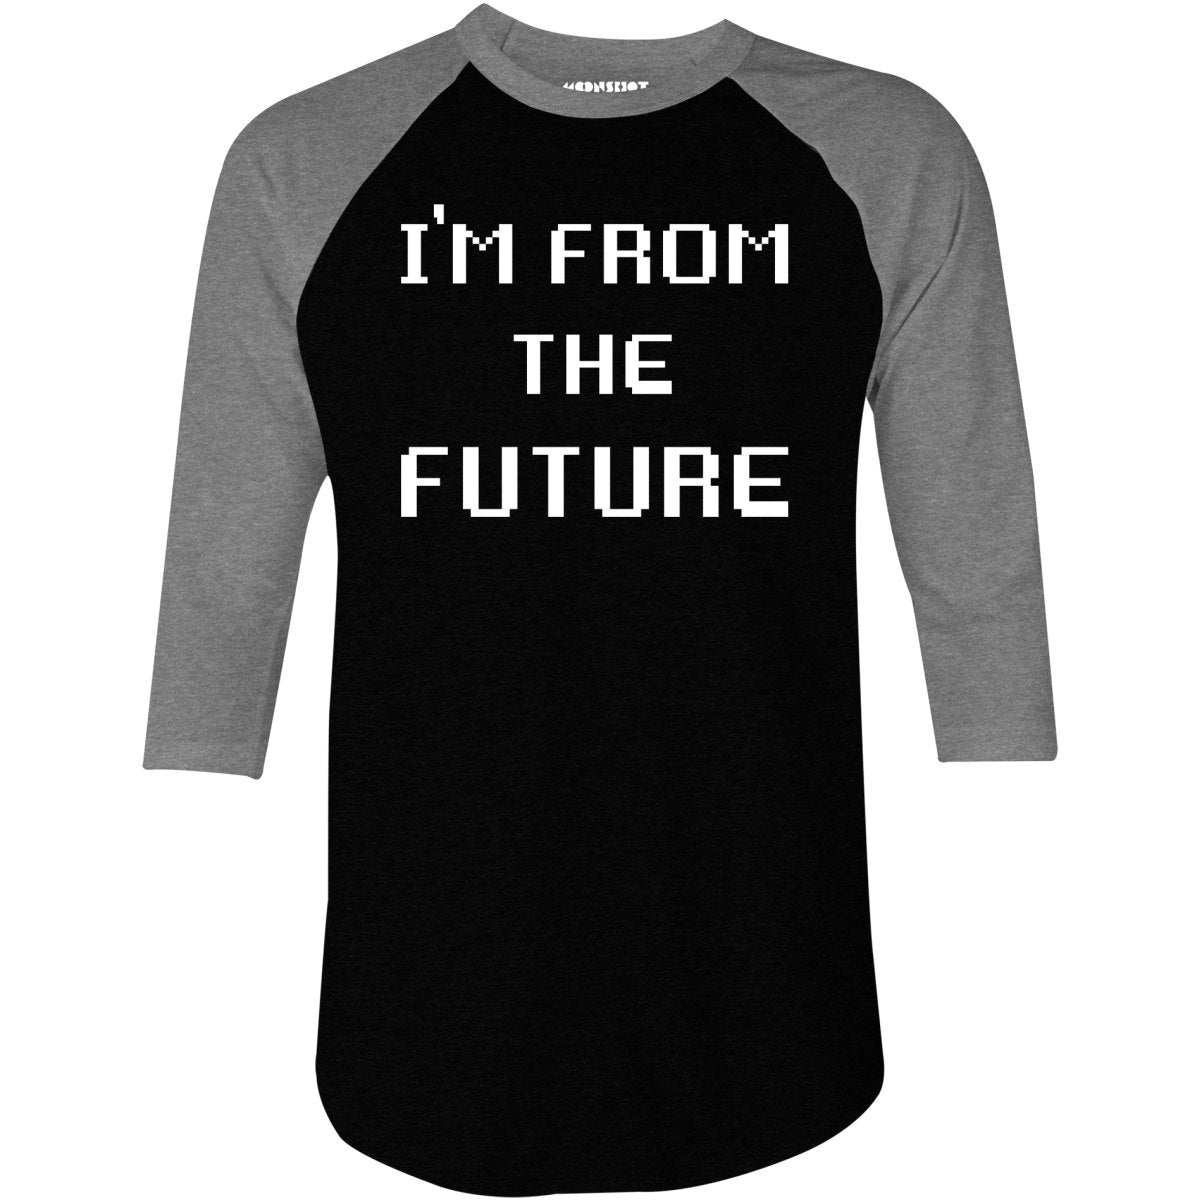 I'm From The Future - 3/4 Sleeve Raglan T-Shirt